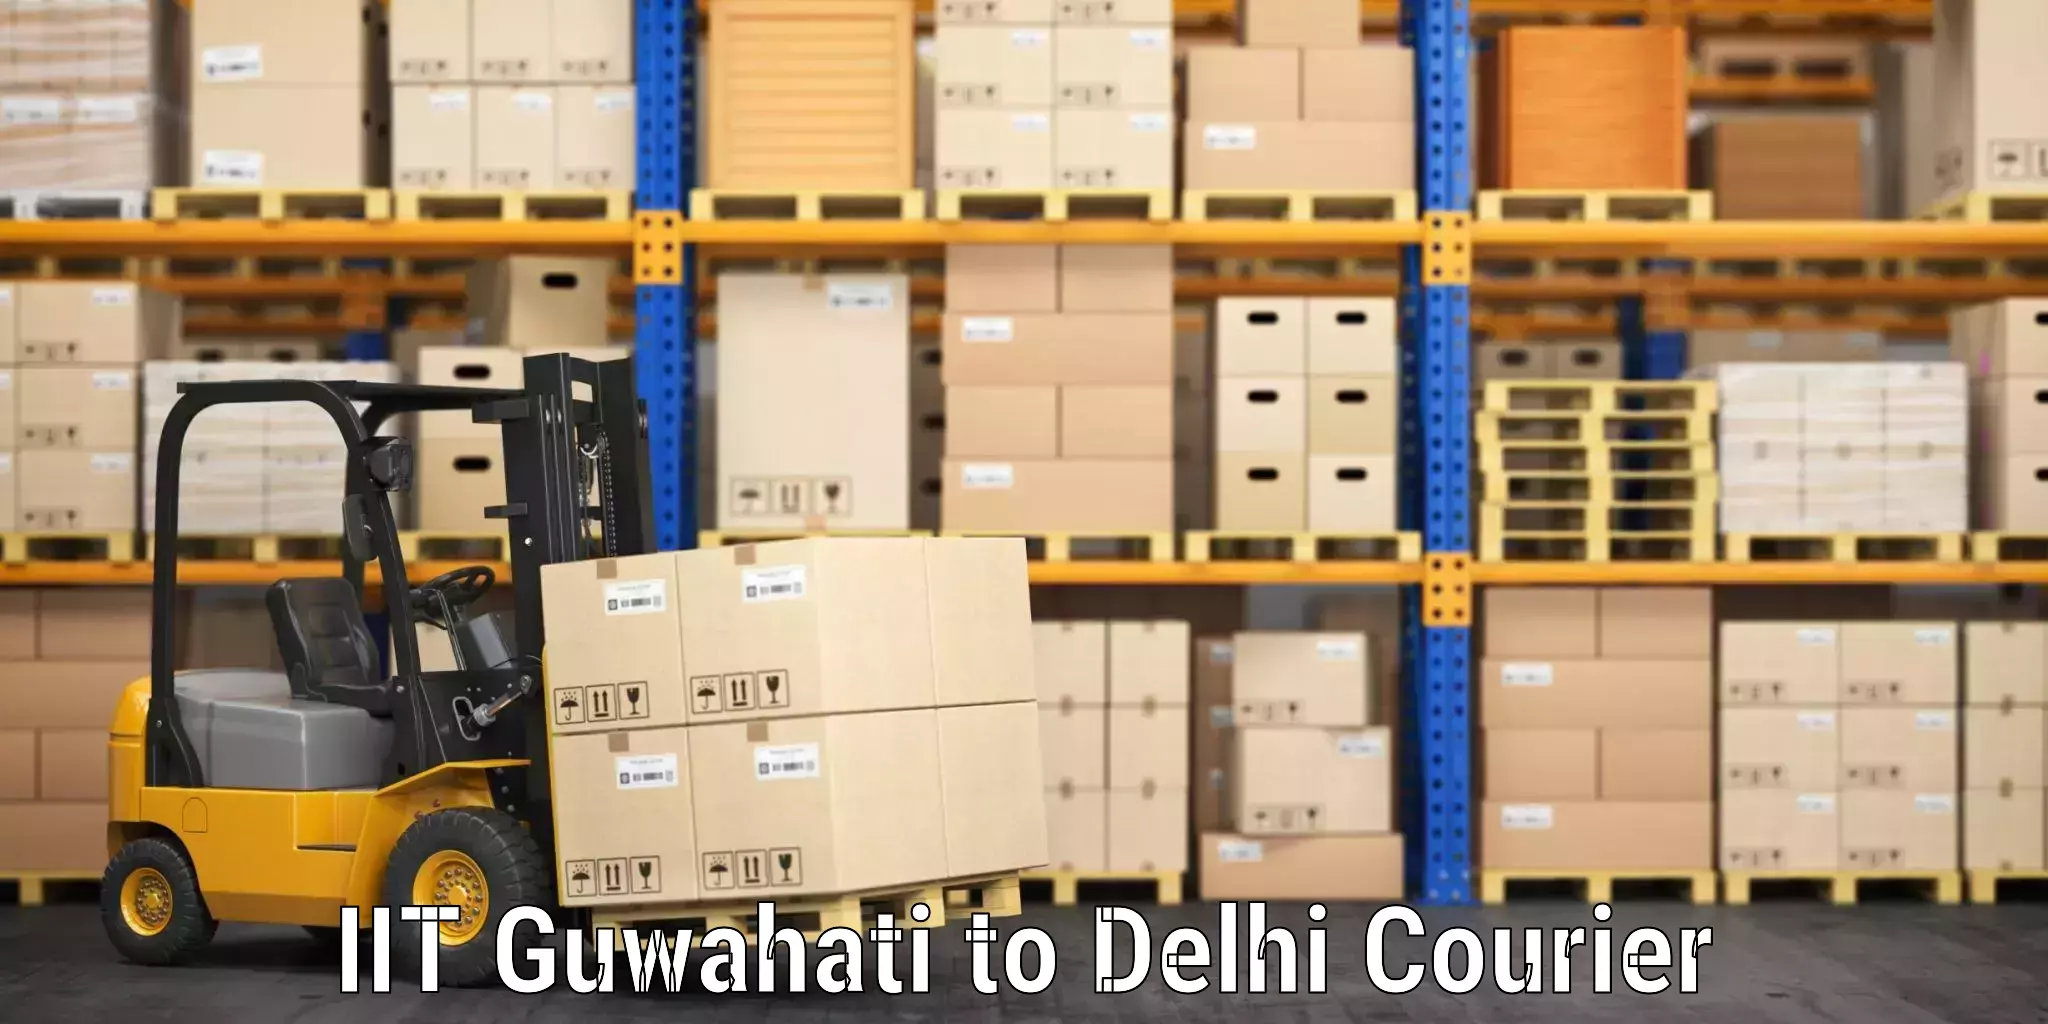 Luggage shipment tracking IIT Guwahati to Delhi